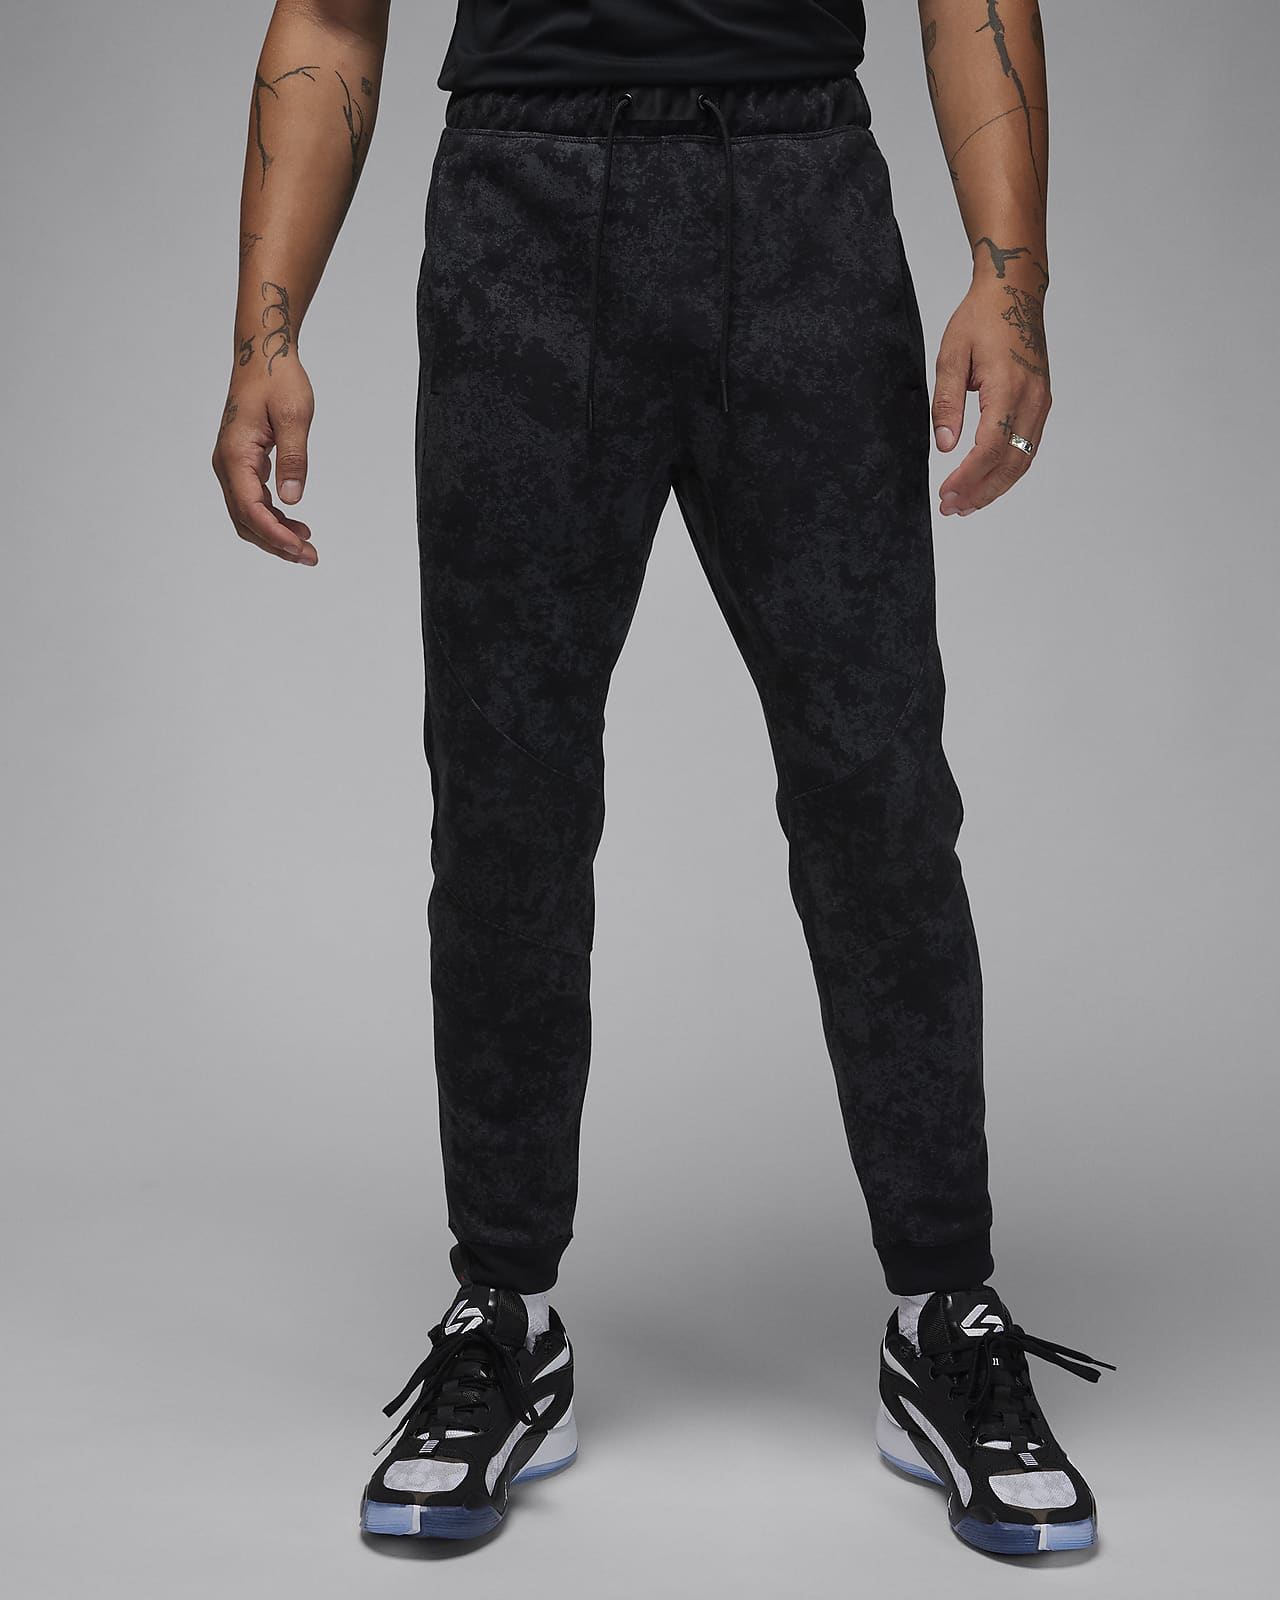 Nike, Pants, New Nike Dri Fit Black Joggers Jogging Pants Standard Fit